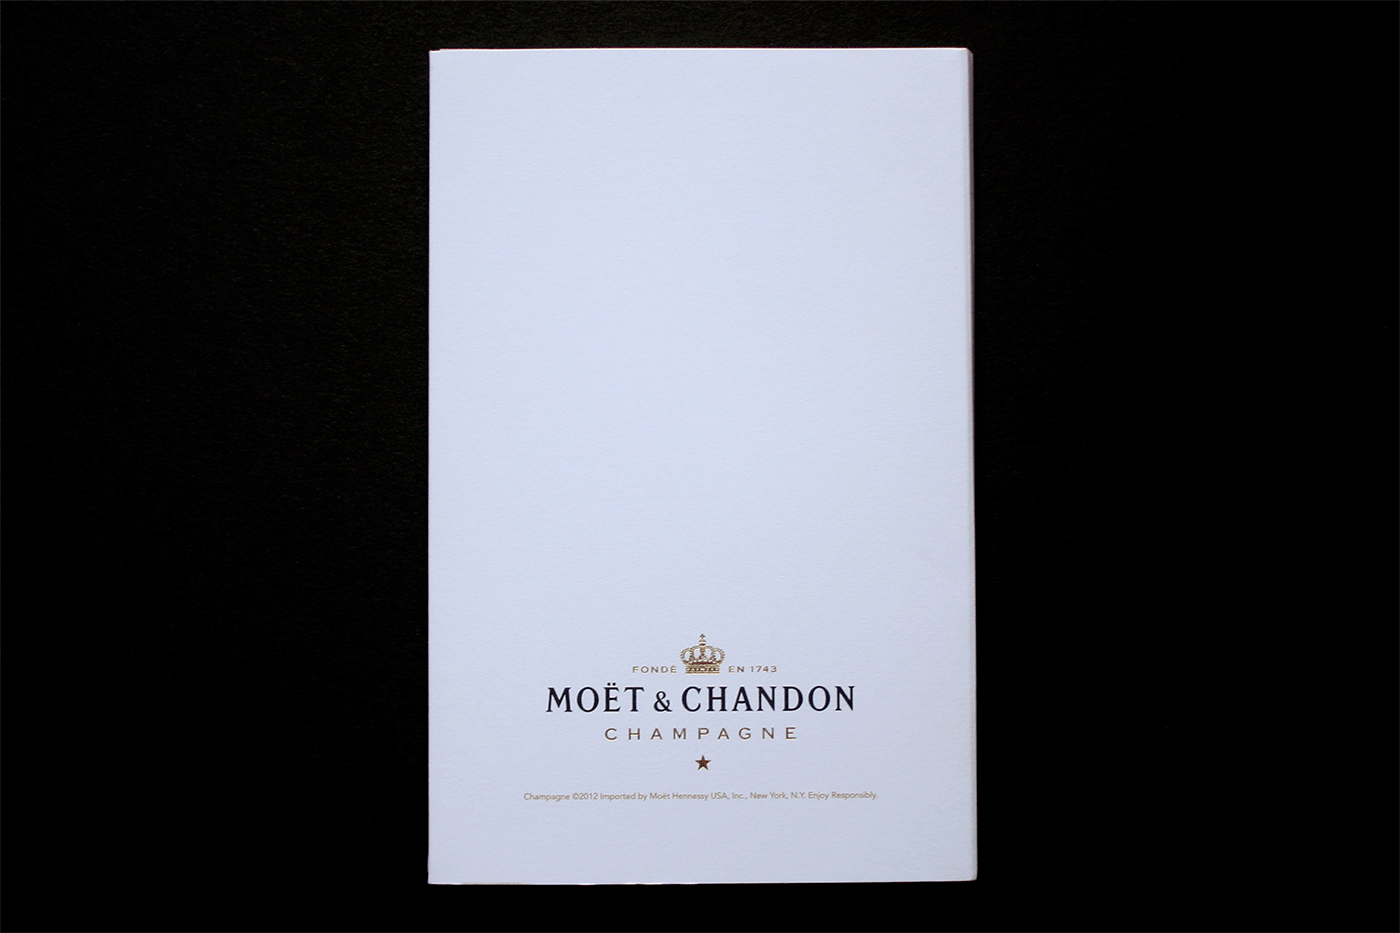 moët & chandon Champagne product notes folder